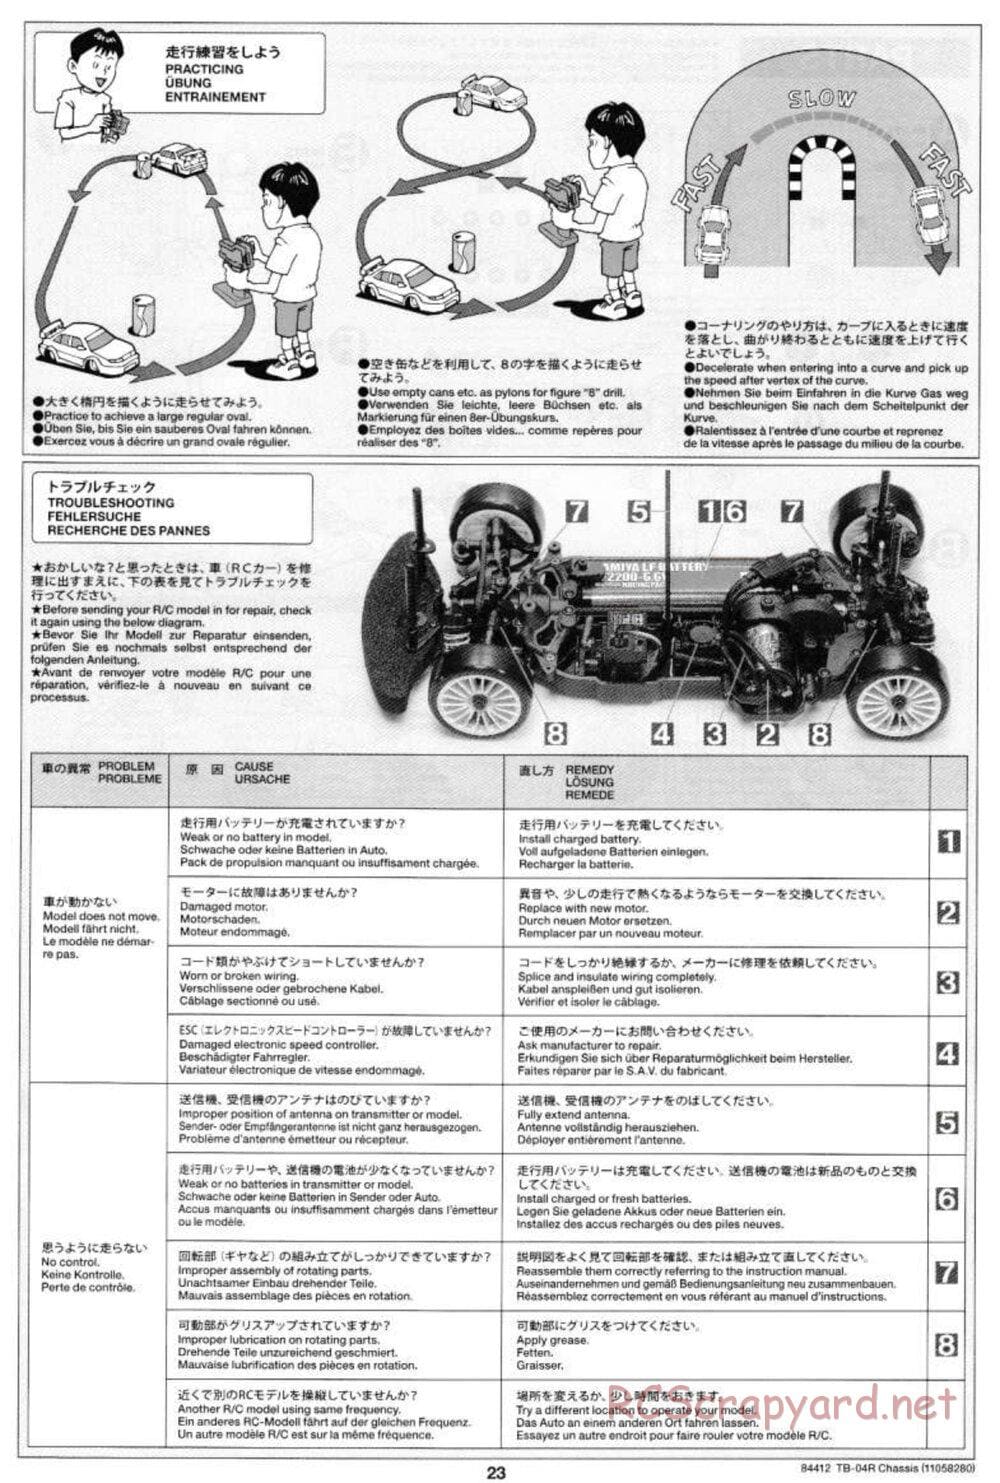 Tamiya - TB-04R Chassis Chassis - Manual - Page 23